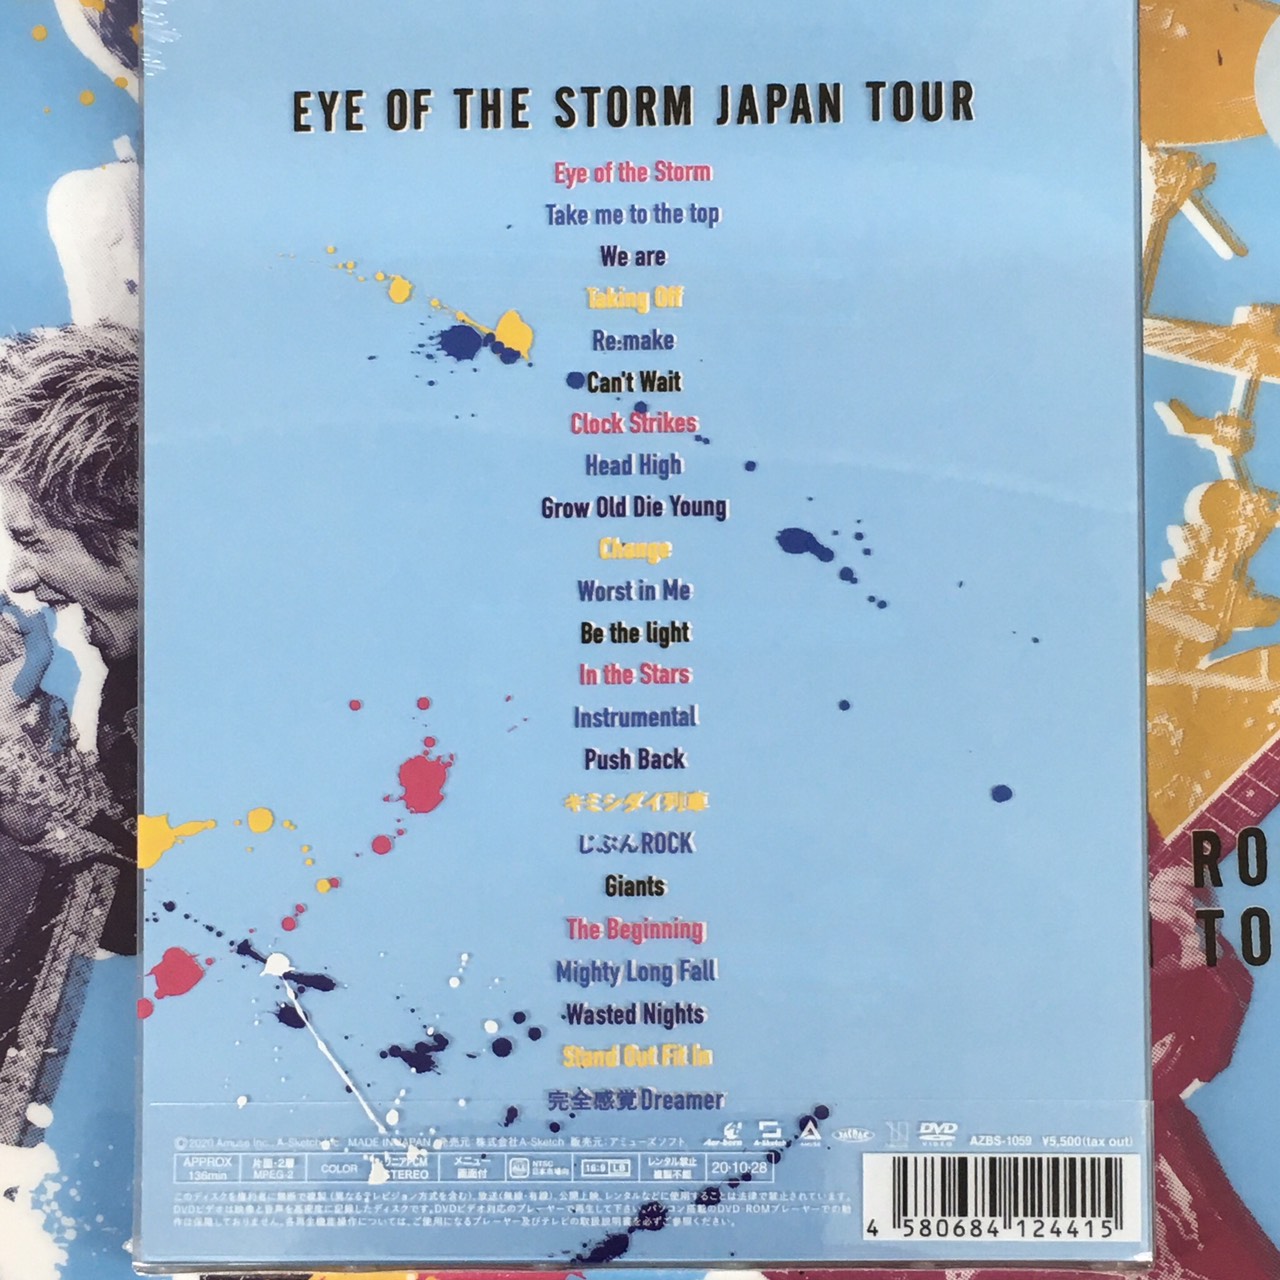 ONE OK ROCK EYE OF THE STORM TOUR DVD